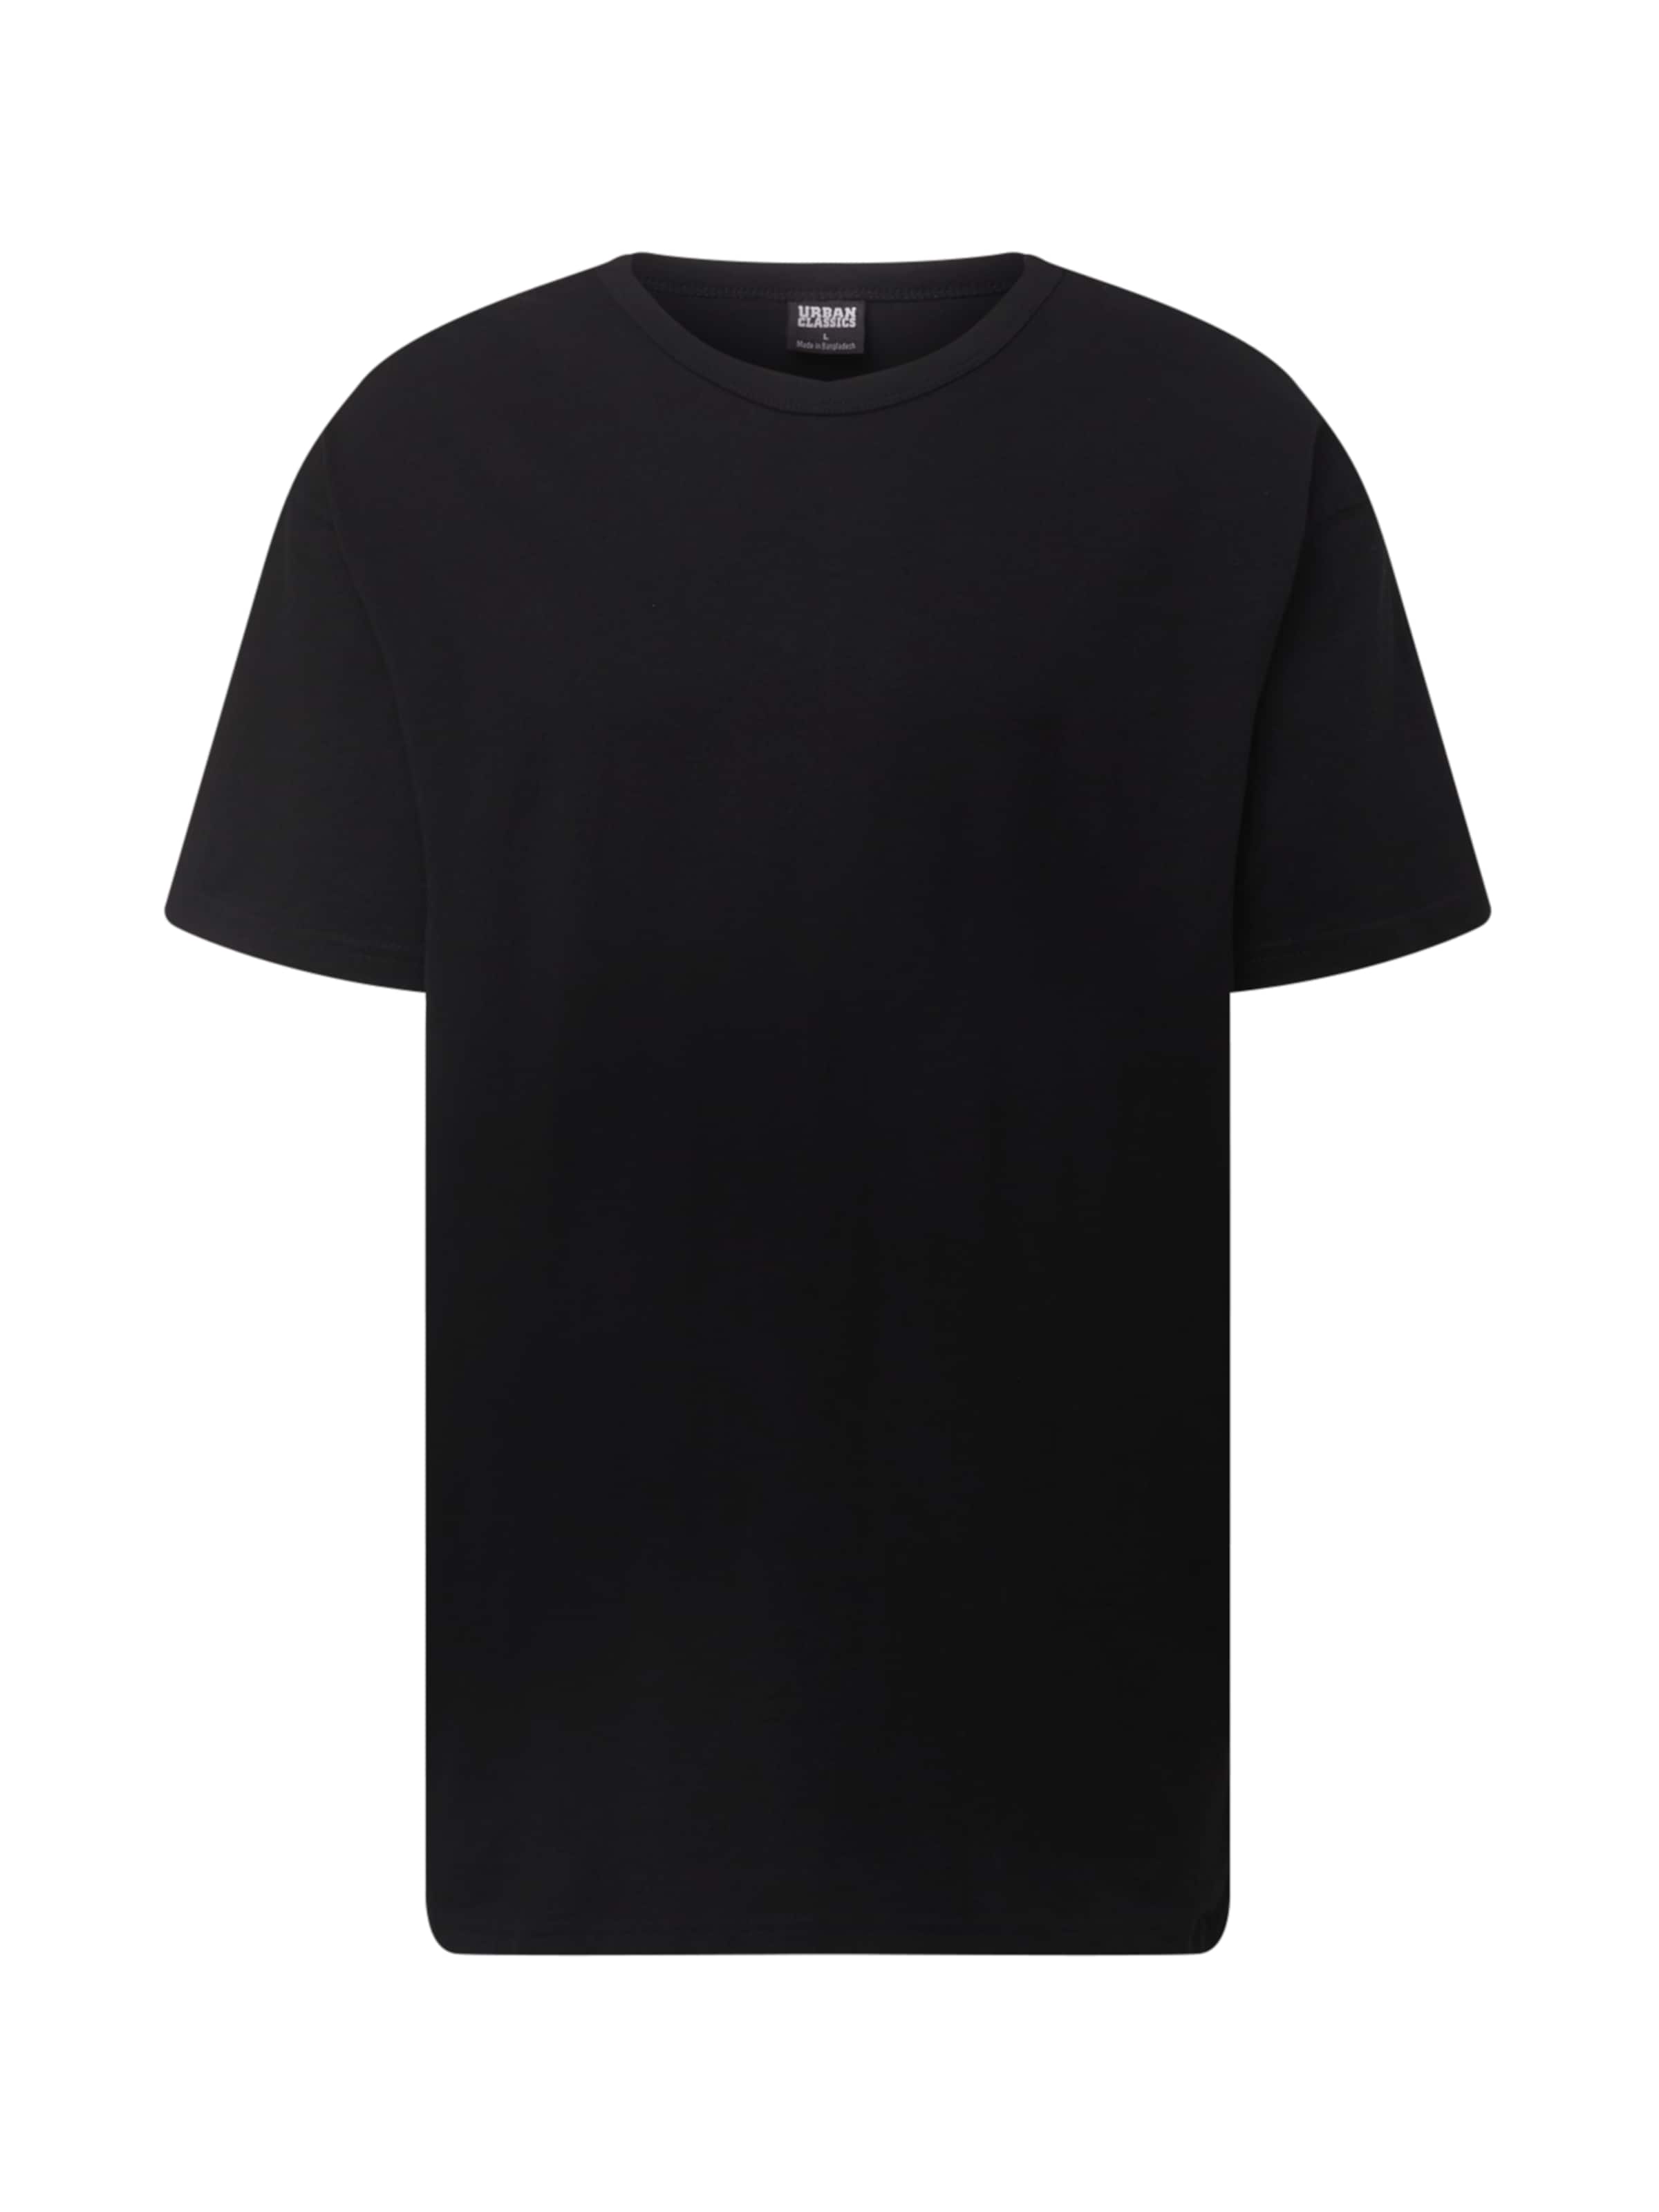 Men T-shirts | Urban Classics Shirt in Black - YK17188